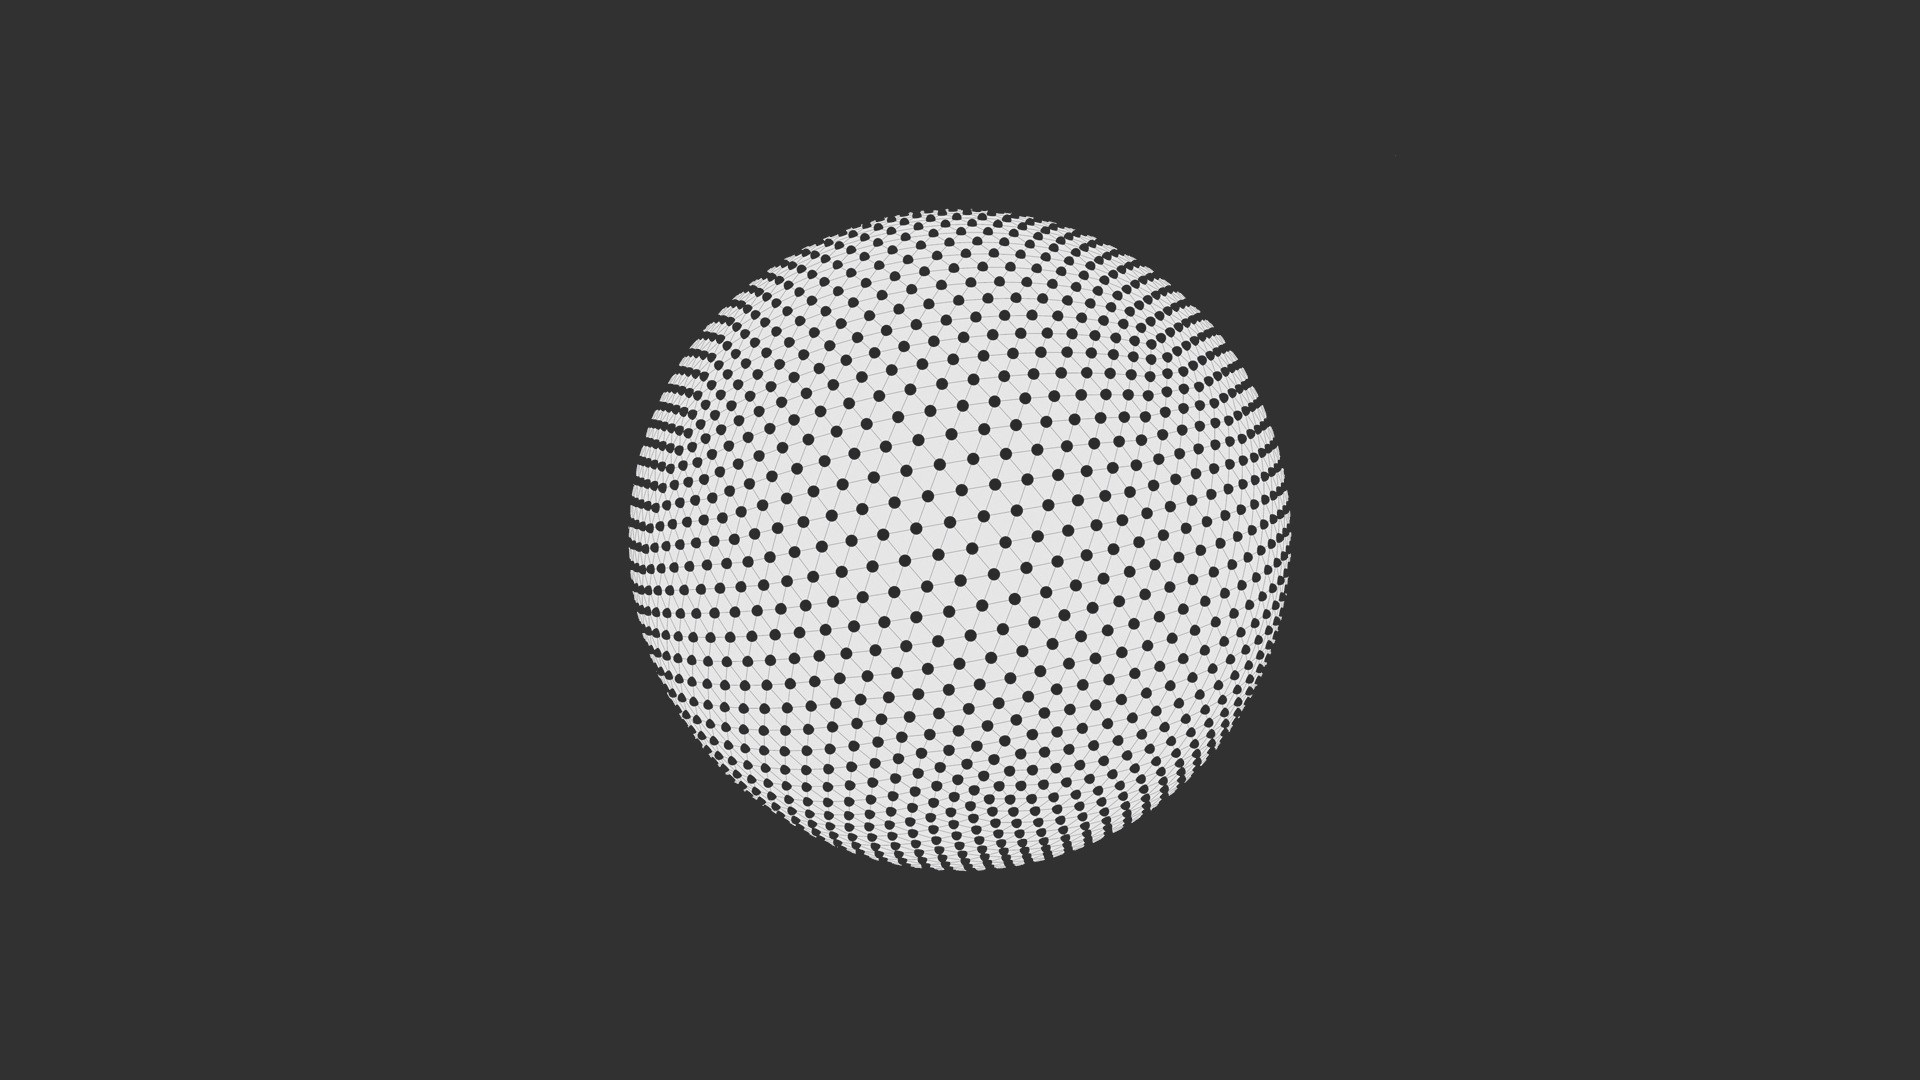 General 1920x1080 ball abstract dark Tesseract (Band) gray gray background